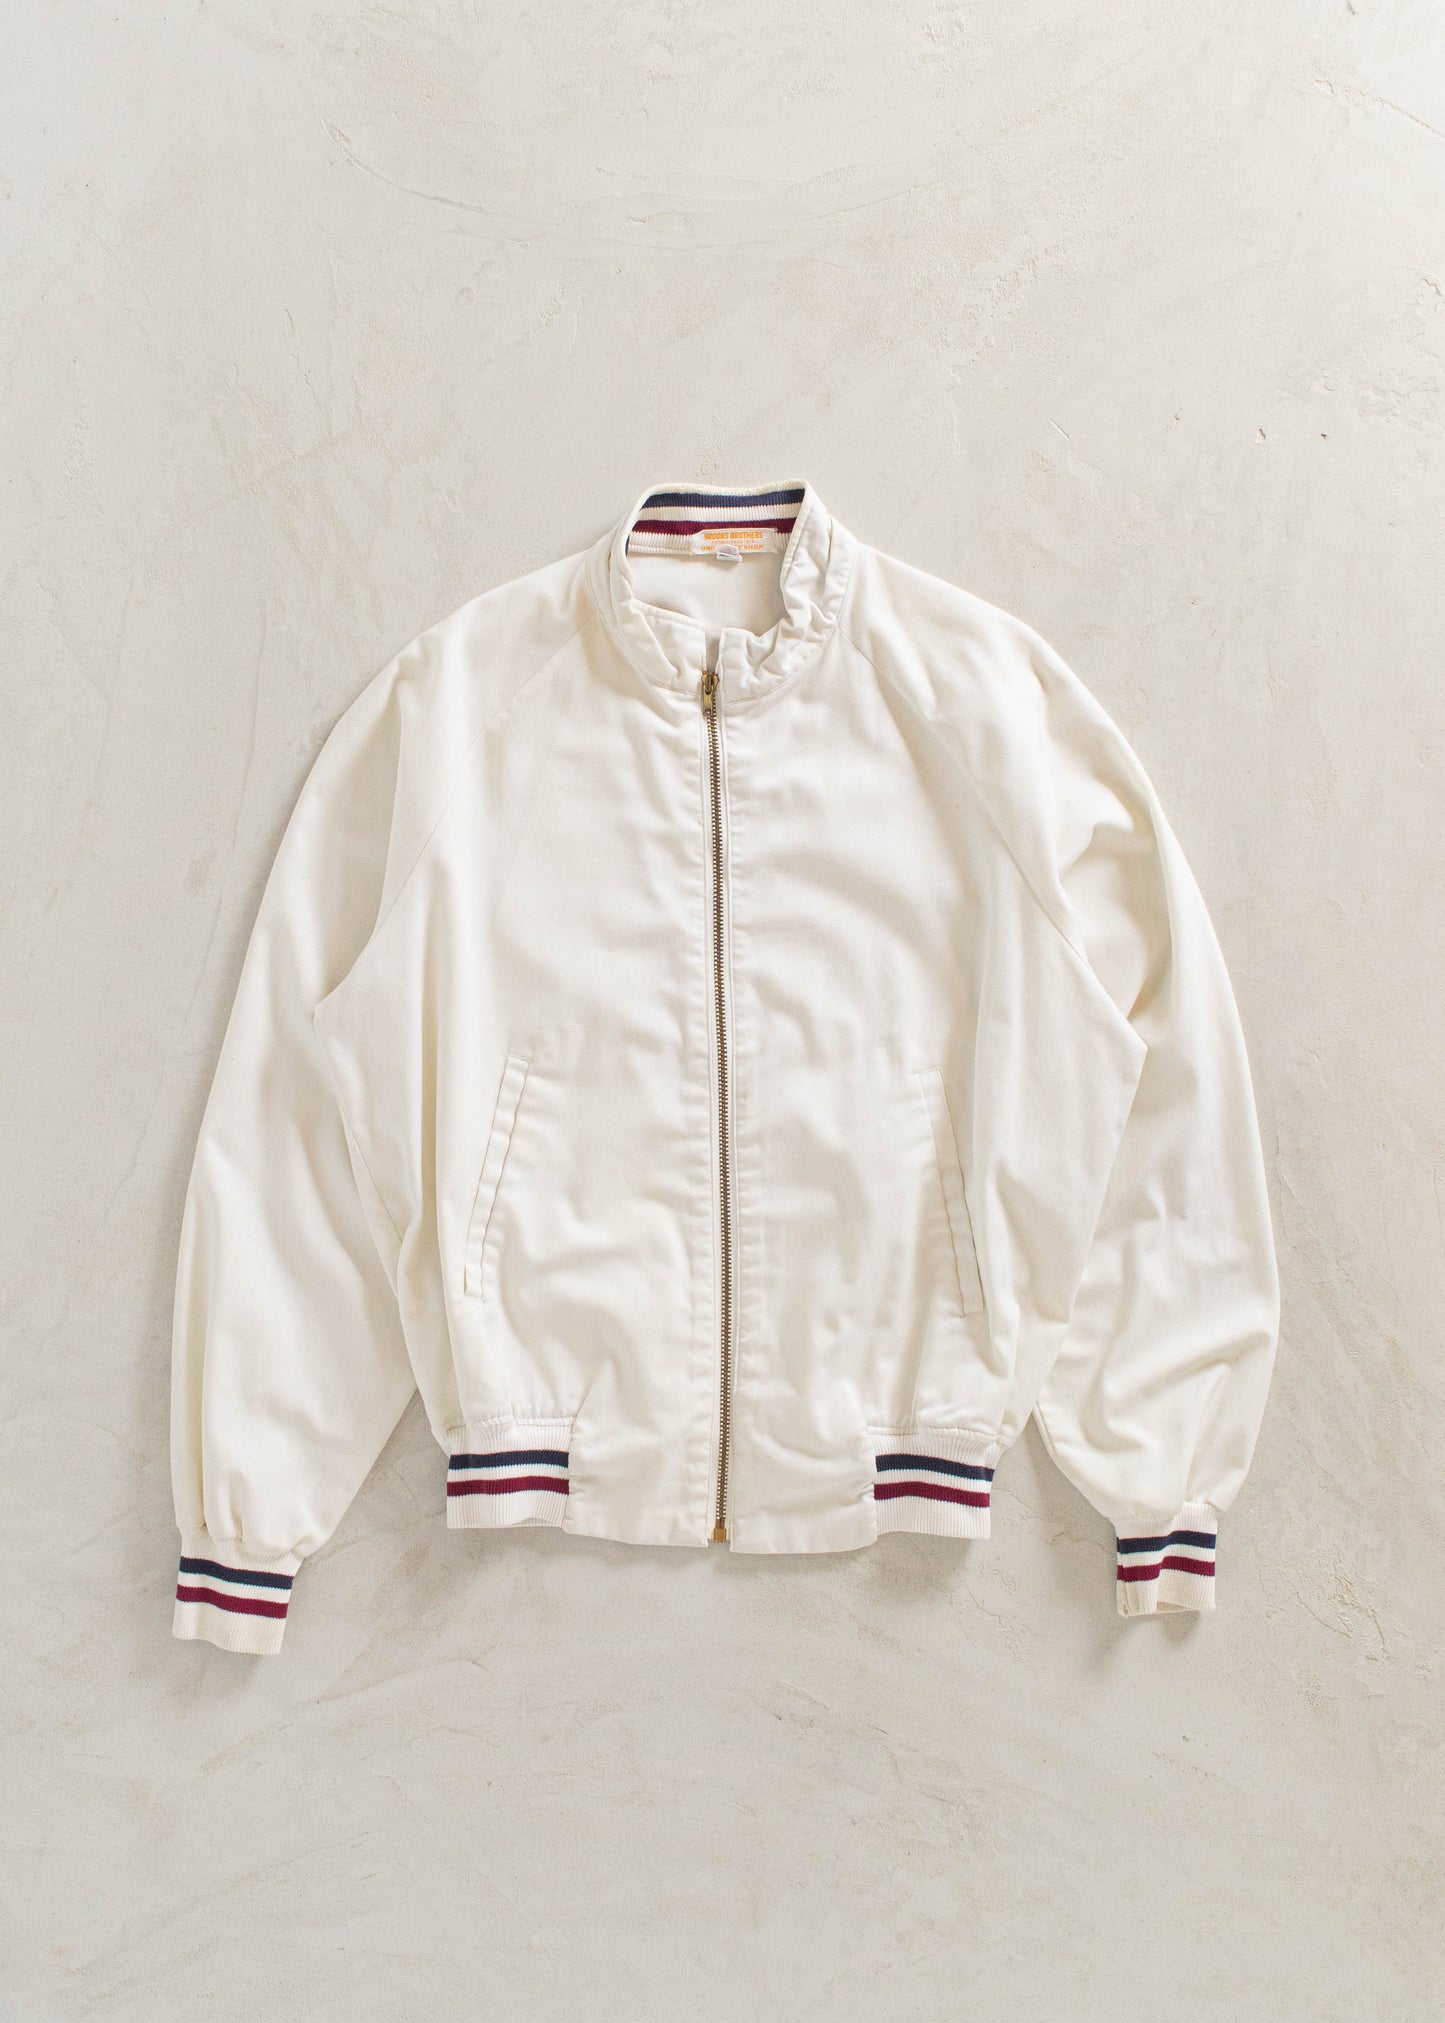 1980s Brooks Brothers Cotton Bomber Jacket Size M/L